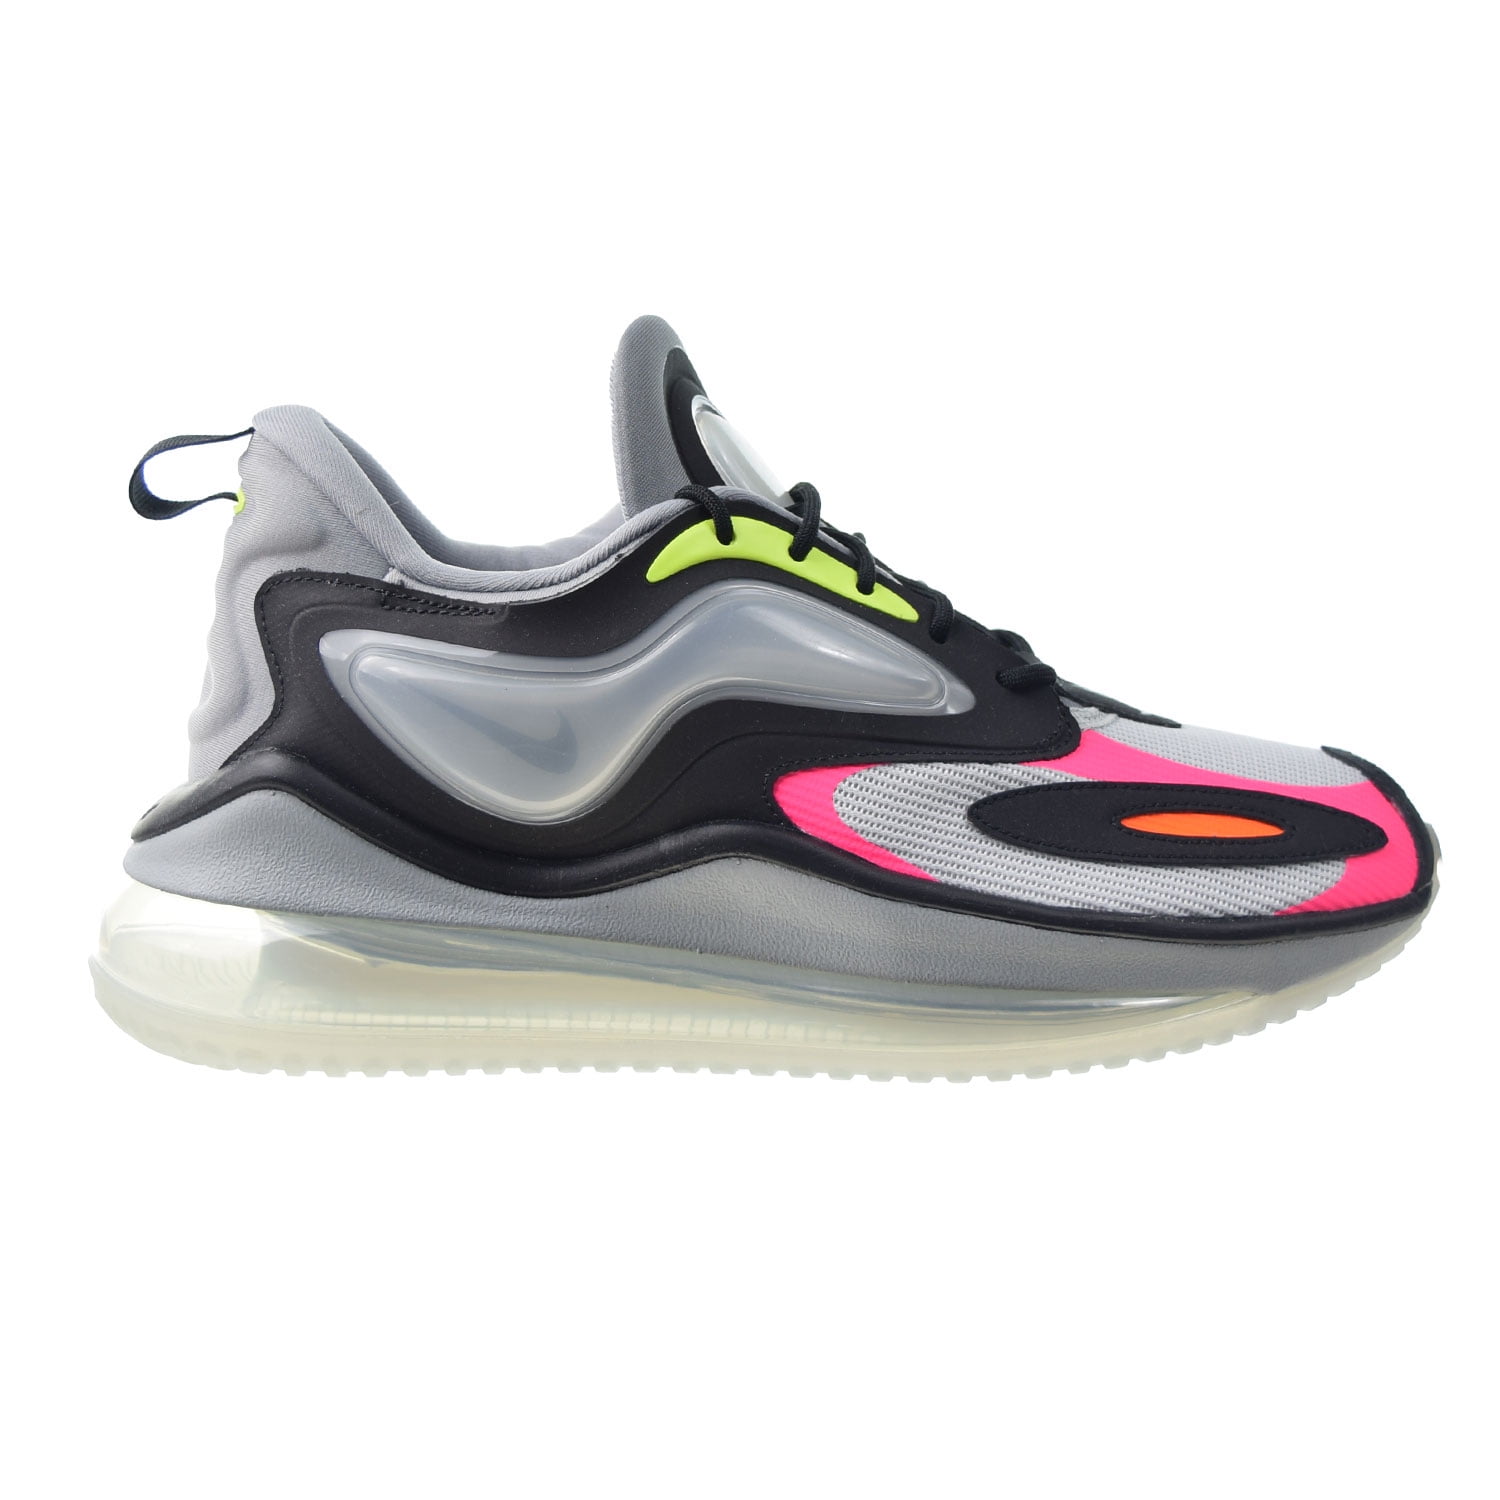 Nike Air Max Zephyr Men's Shoes Photon Dust-Black ct1682-002 - Walmart.com